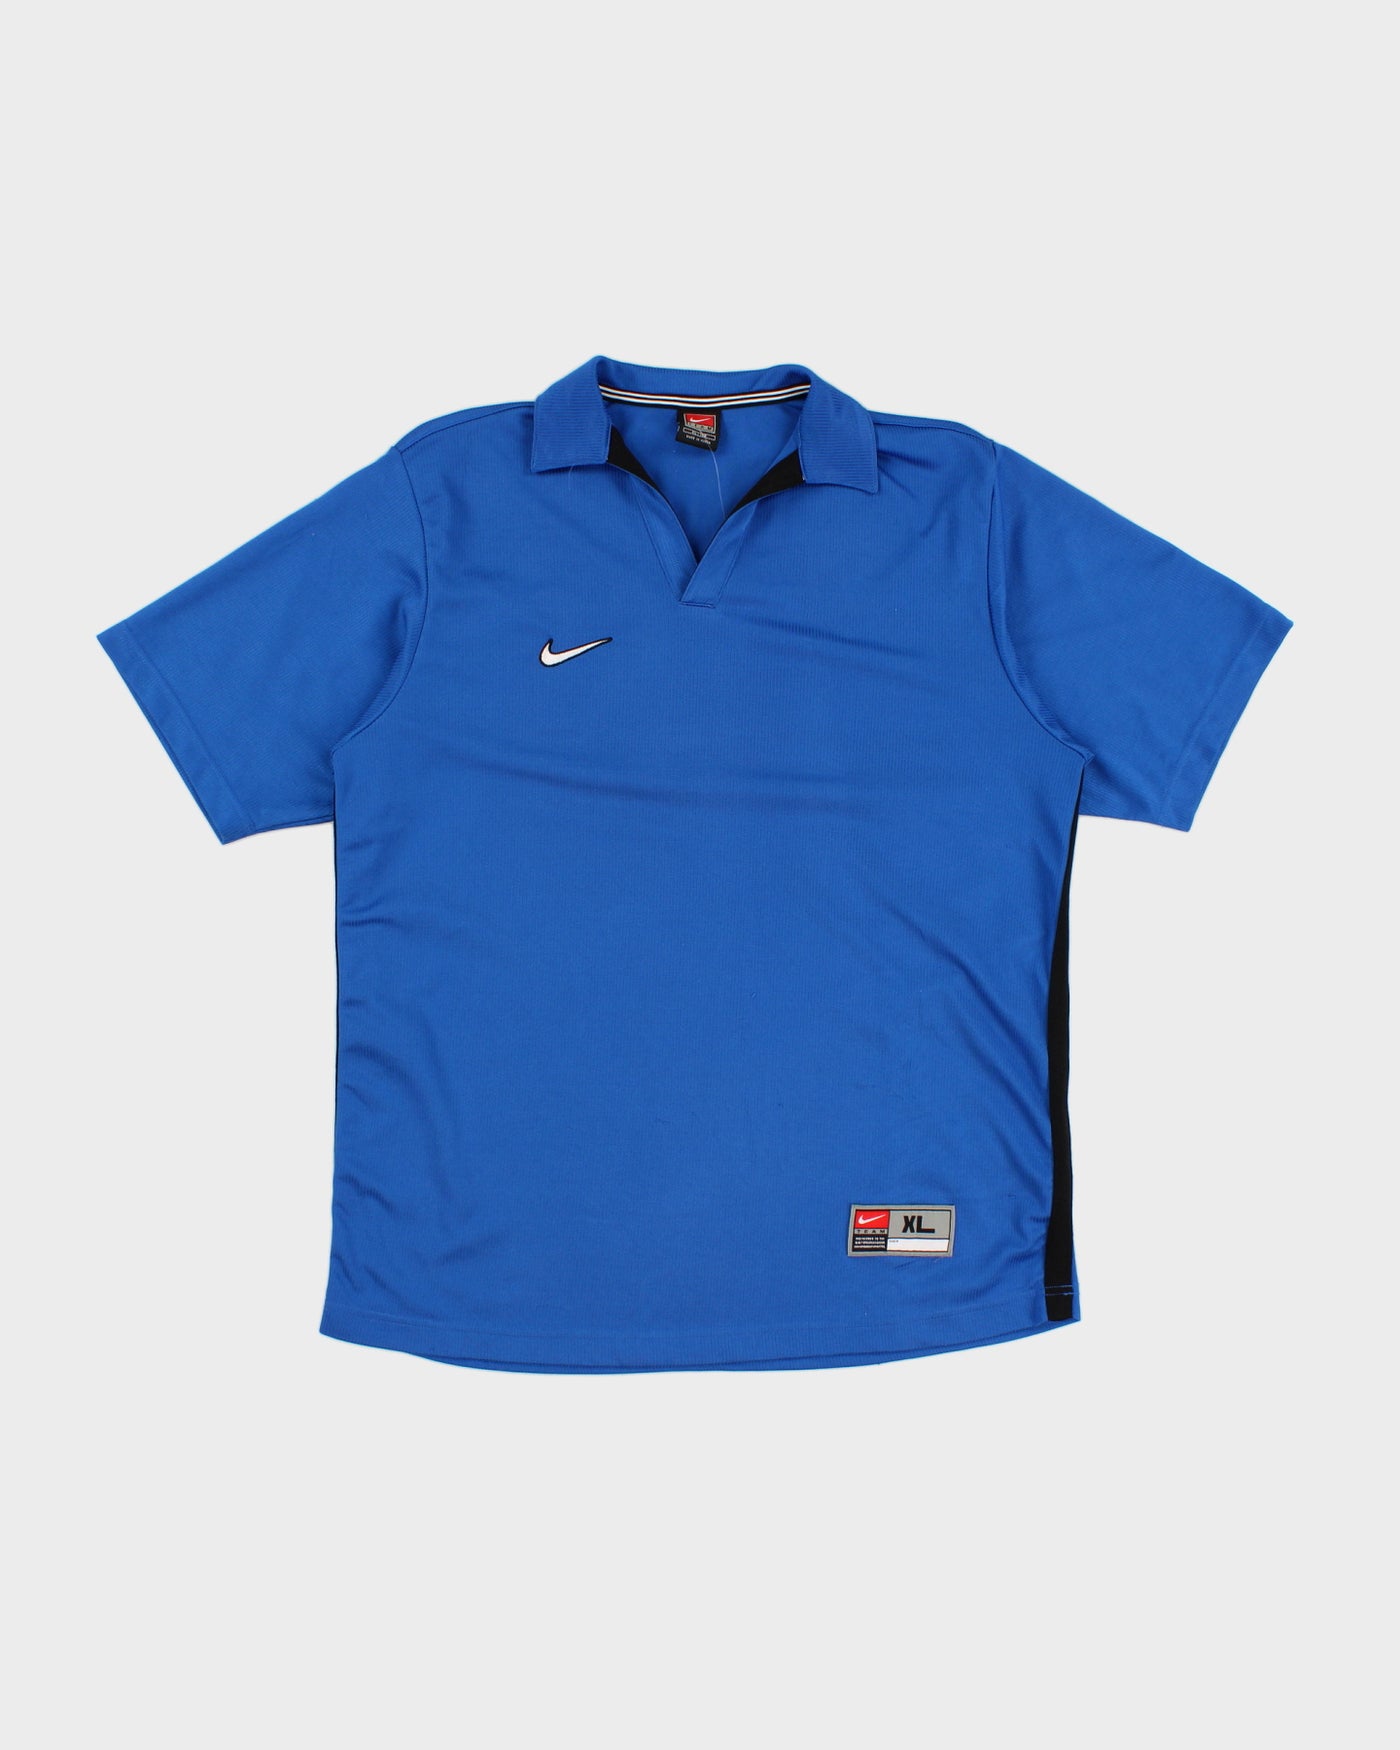 Vintage 90s Nike Football Shirt - XL